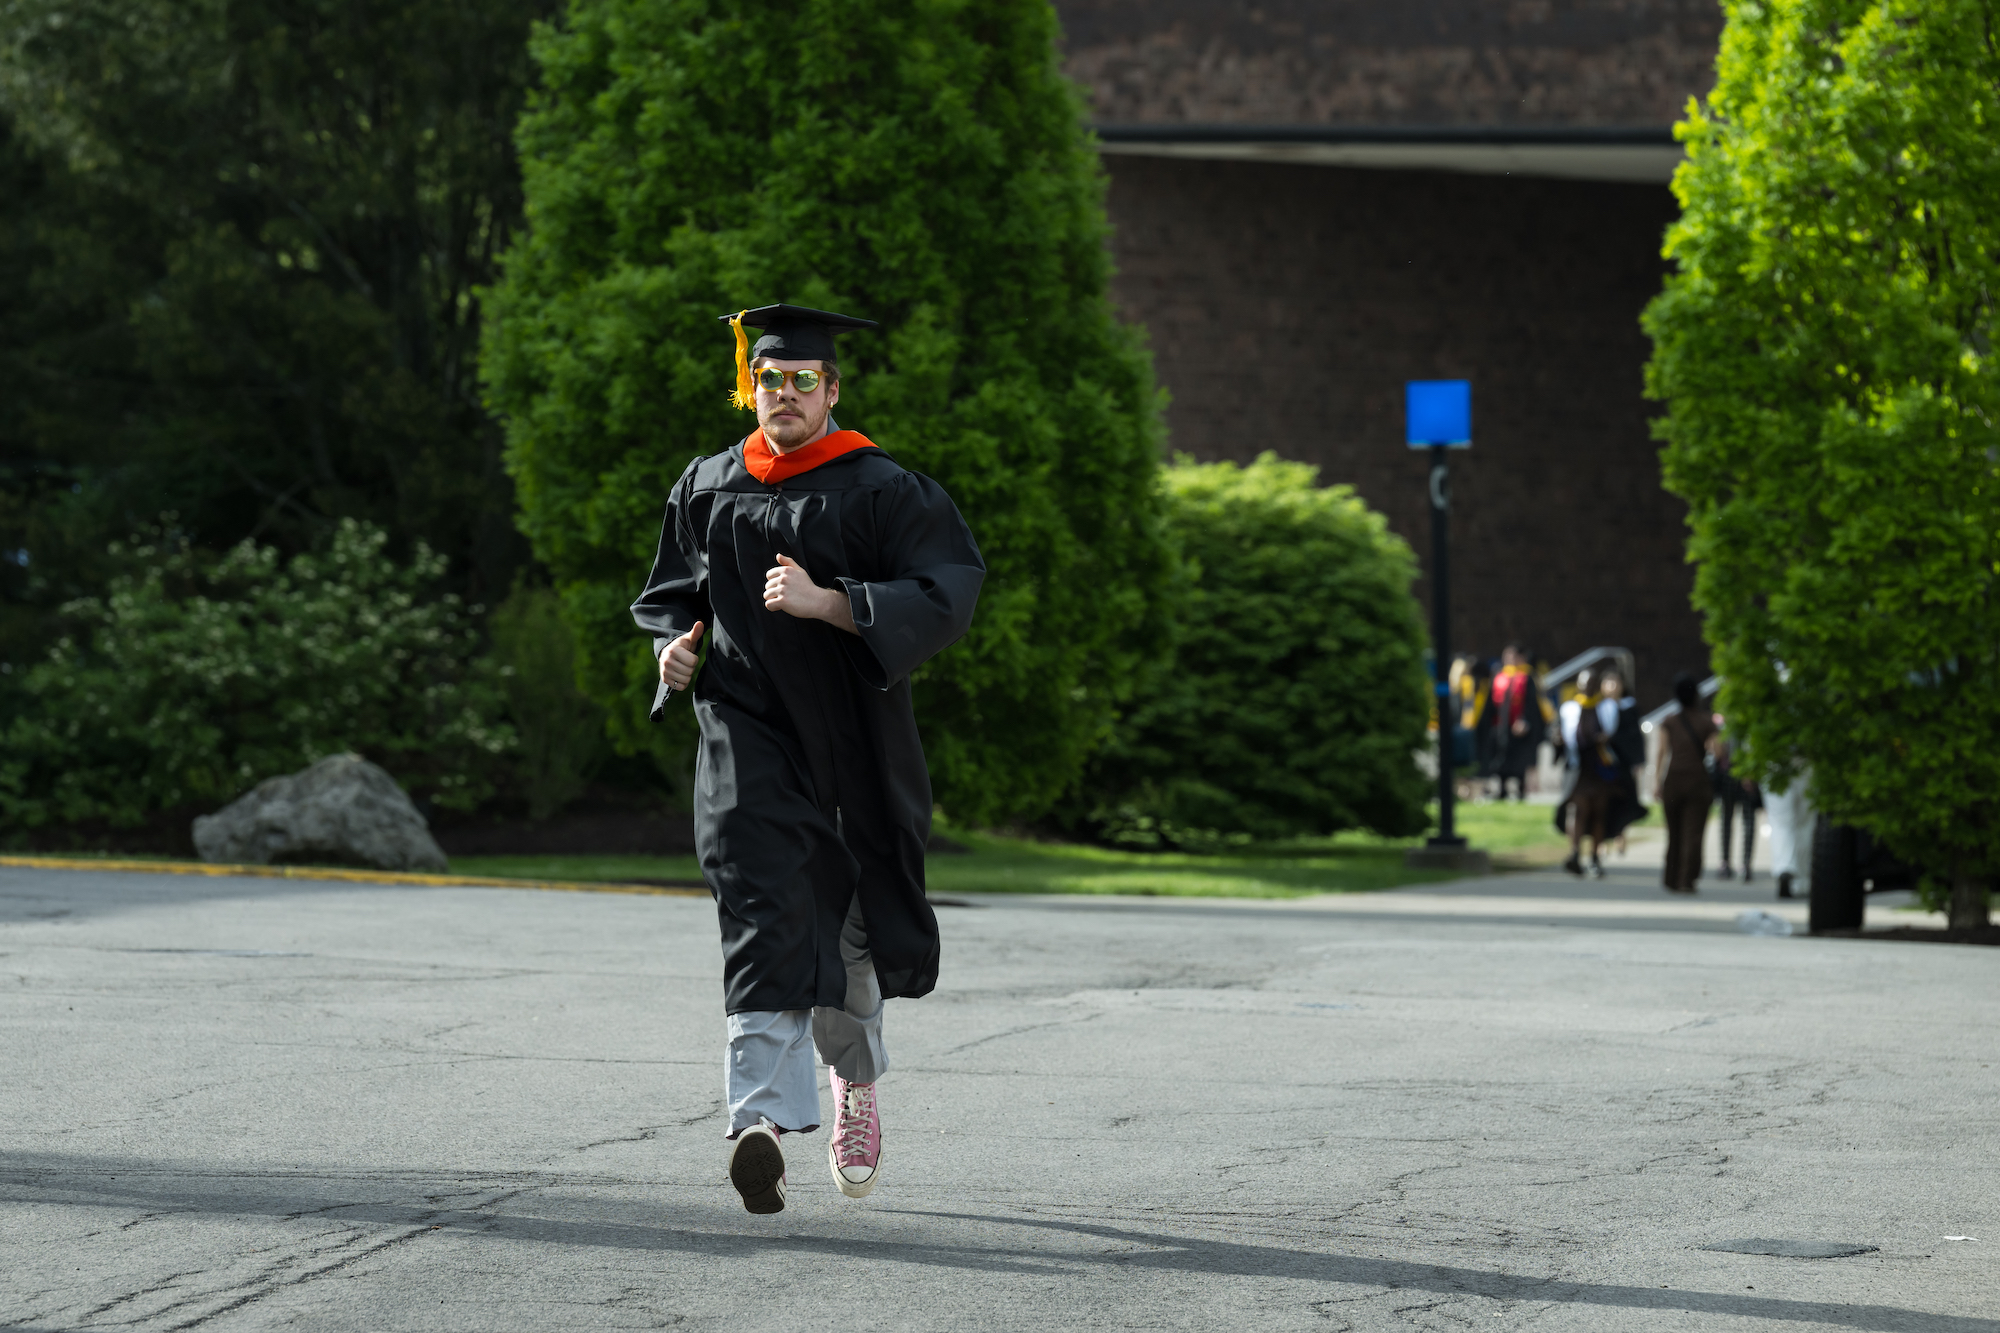 A student in graduation regalia, running